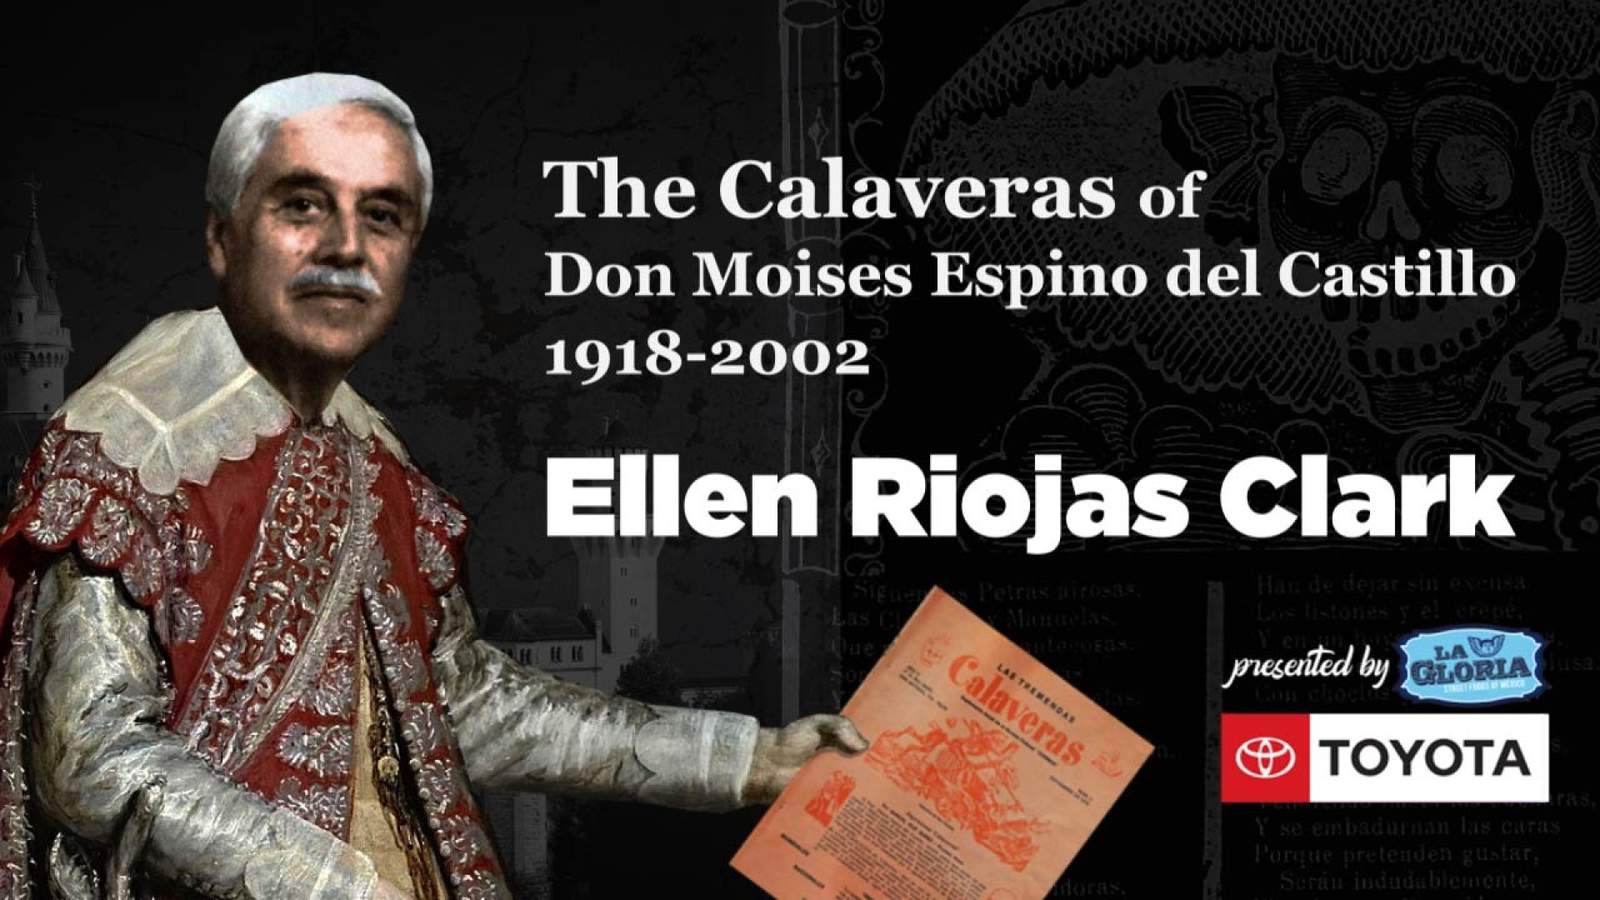 San Antonio's 'Duke of Calaveras' writes Day of the Dead poem about Ellen Riojas Clark